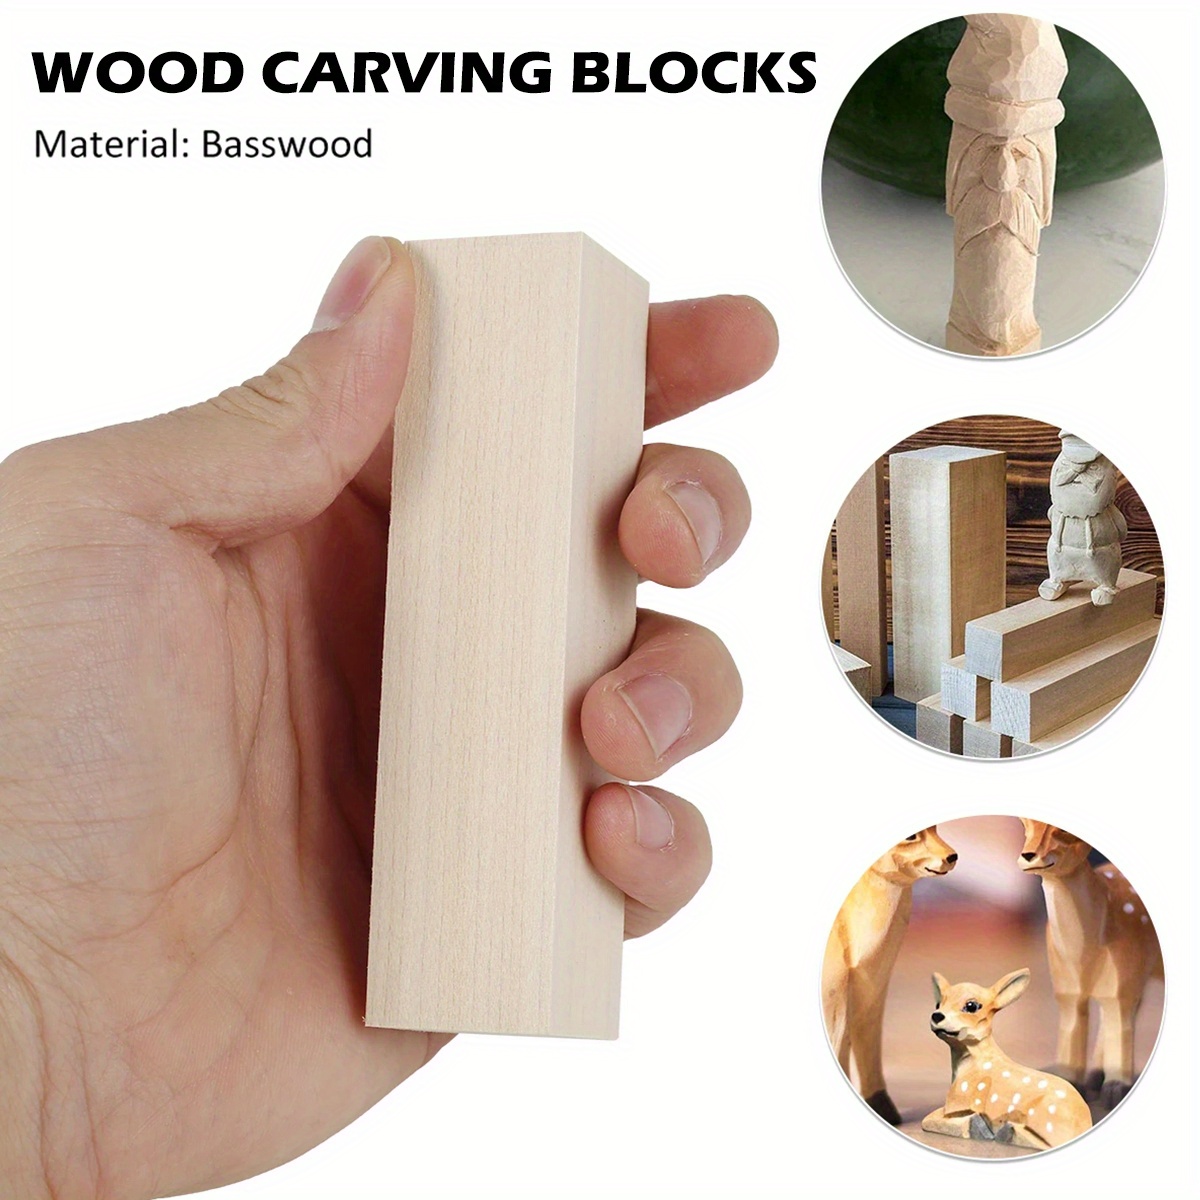 Balsa Wood Block